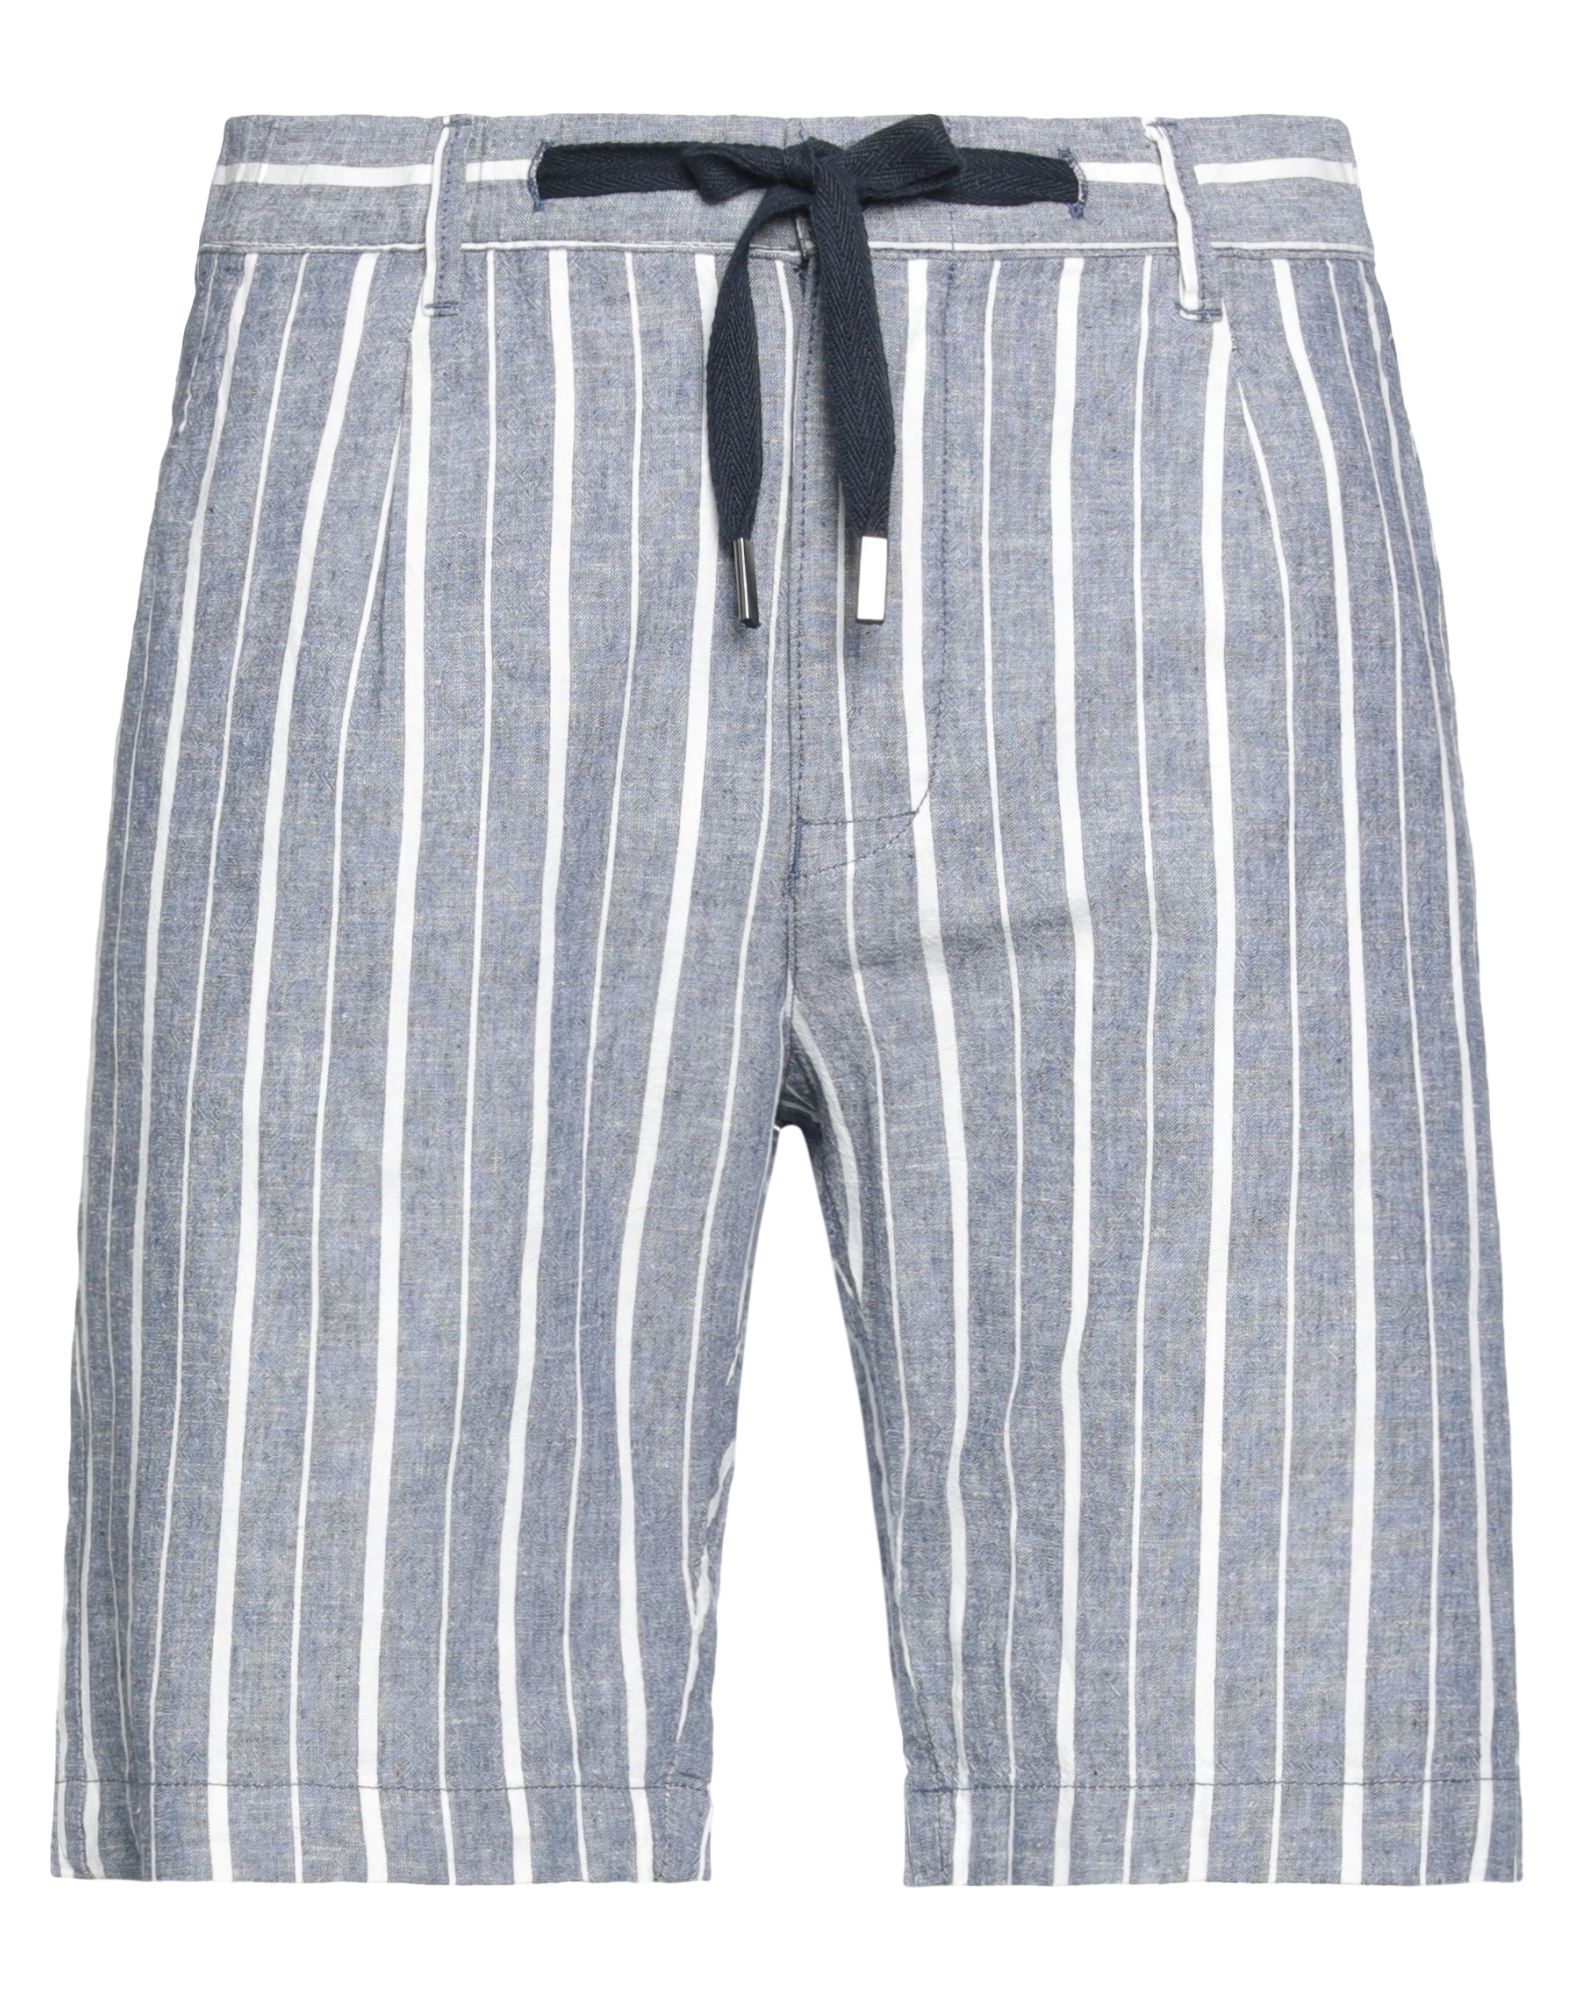 Alley Docks 963 Man Shorts & Bermuda Shorts Slate Blue Size 34 Linen, Cotton